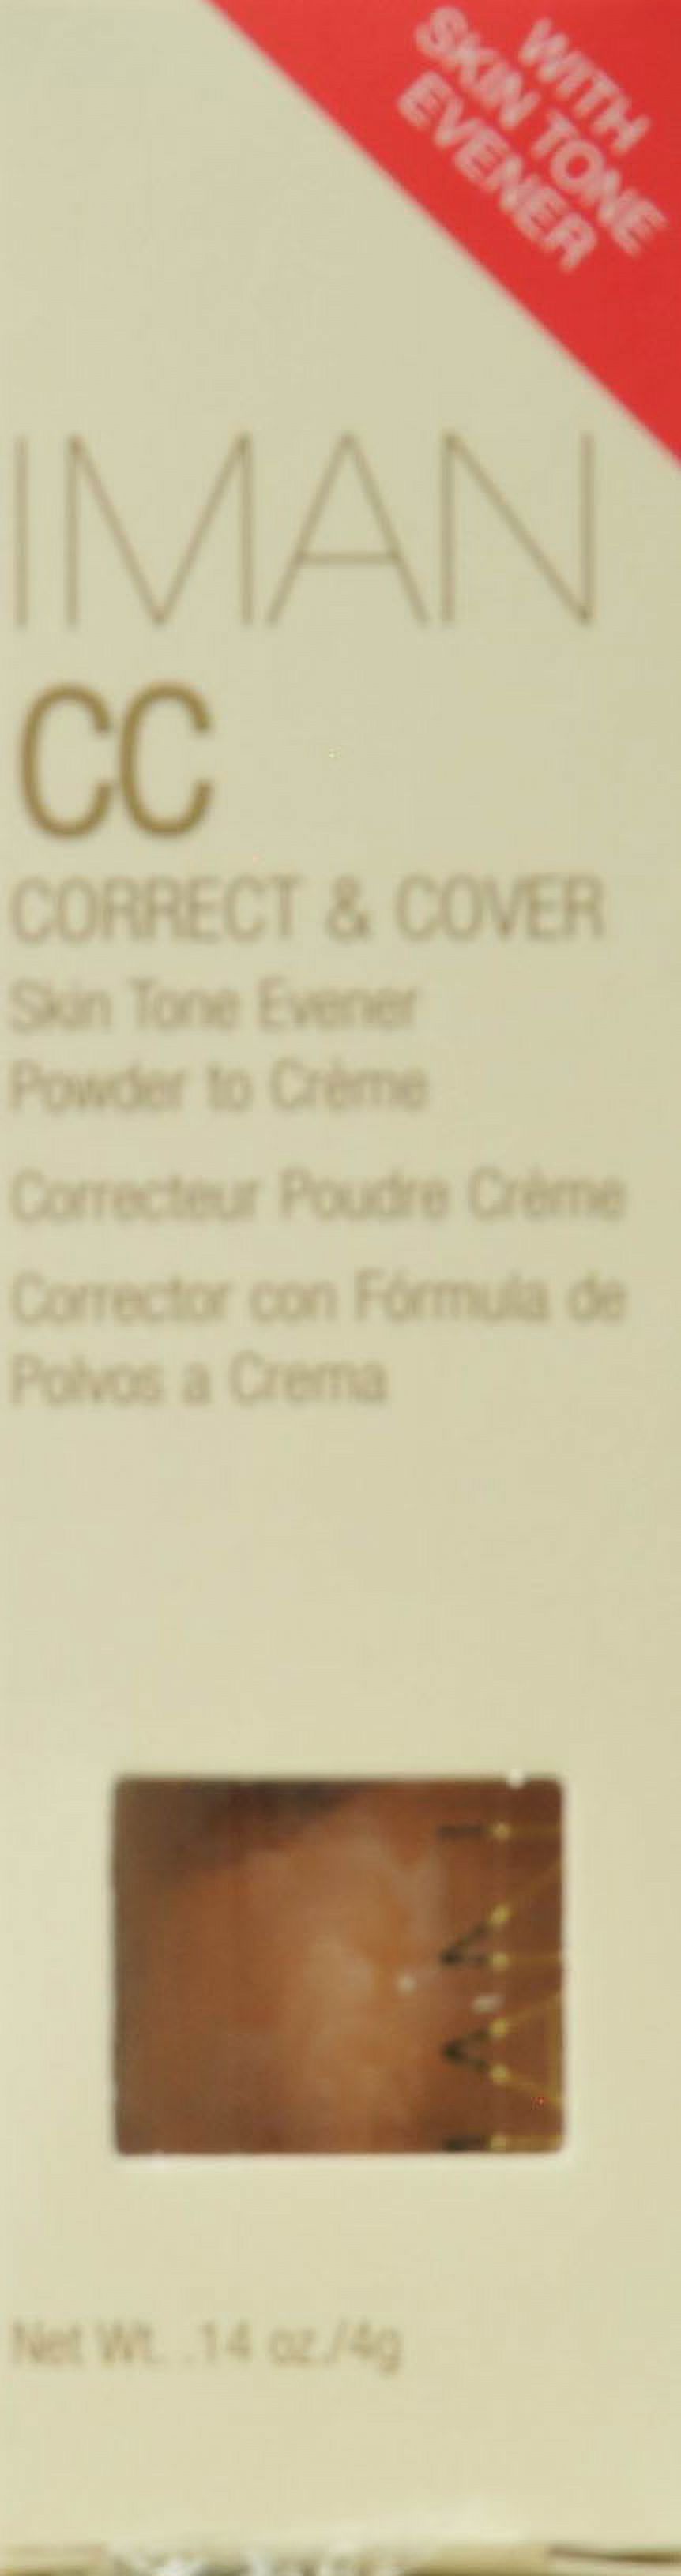 IMAN Cosmetics IMAN Correct & Cover Skin Tone Evener, 0.14 oz - image 2 of 4